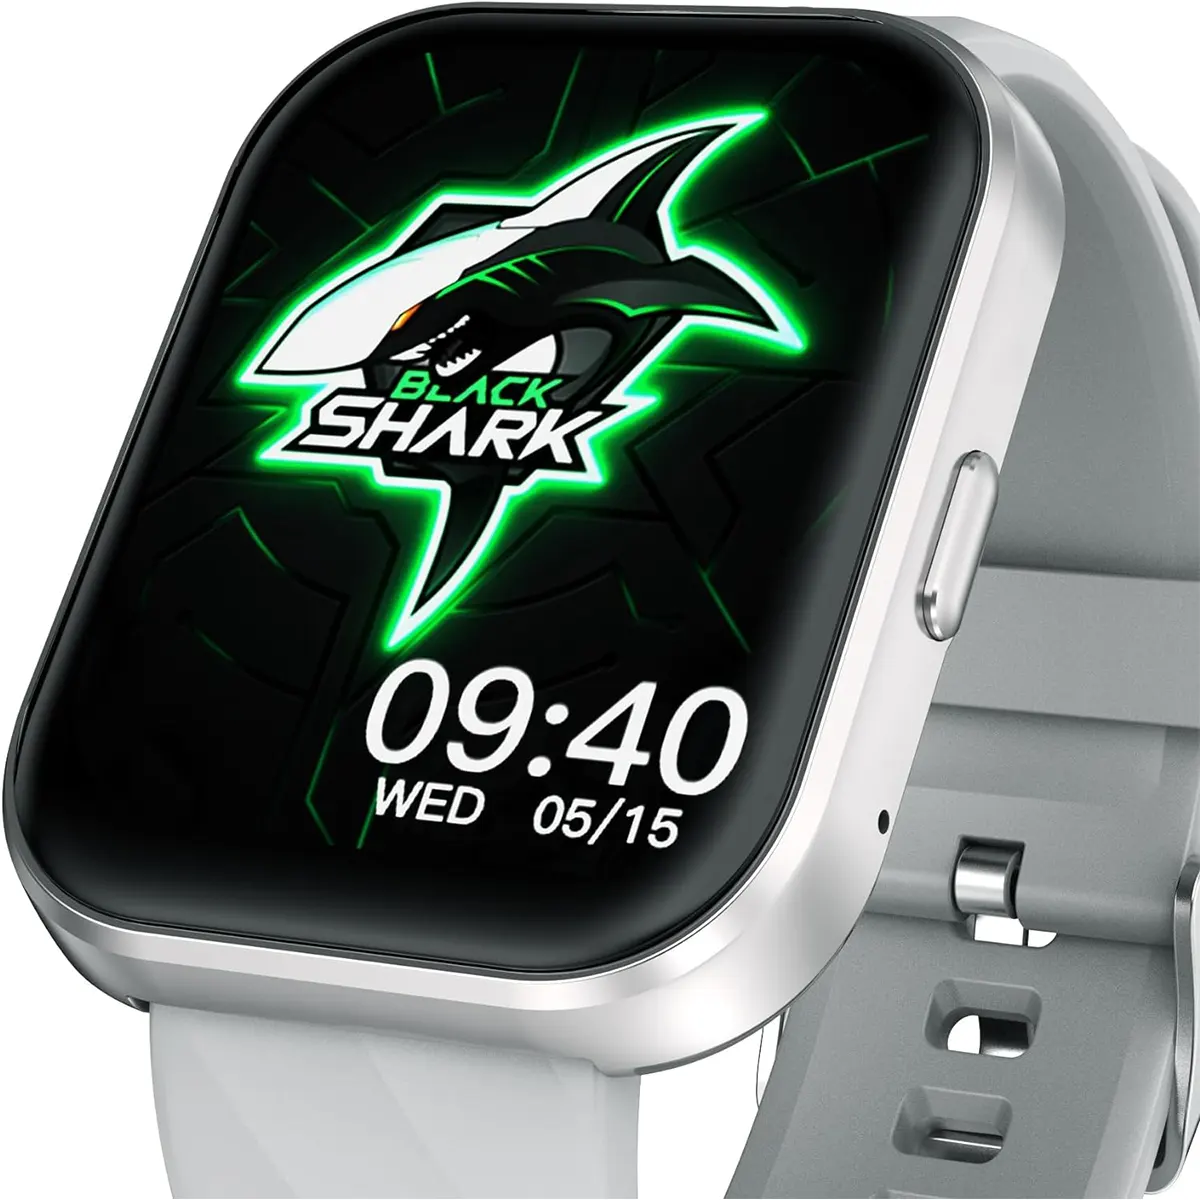 ساعت هوشمند بلک شارک Black Shark GT Neo Smart Watch رنگ نقره ای (2)